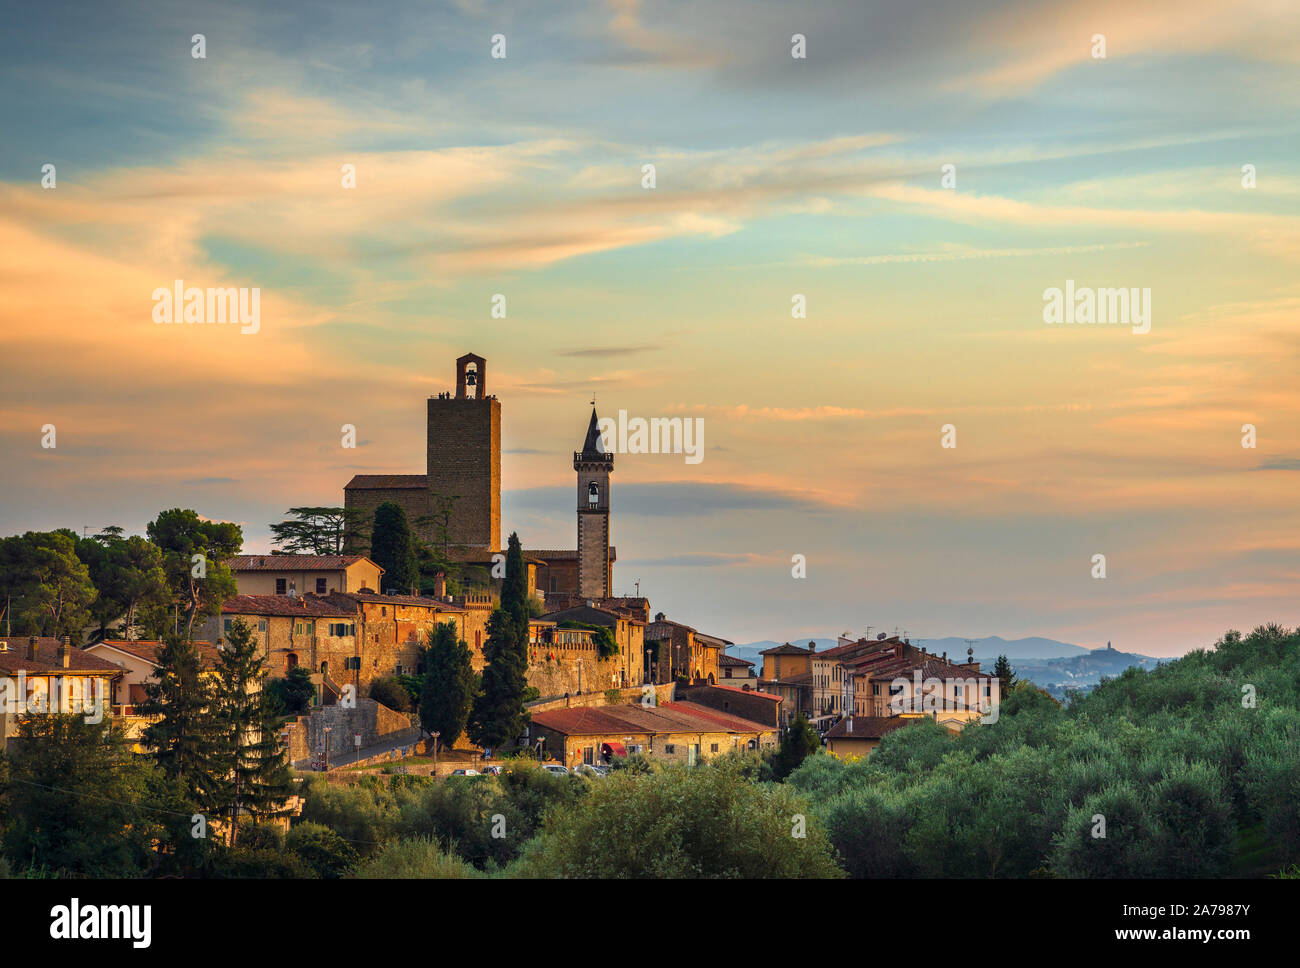 Vinci, Leonardo Geburtsort, Luftbild und Glockenturm der Kirche. Florenz, Toskana Italien Europa Stockfoto